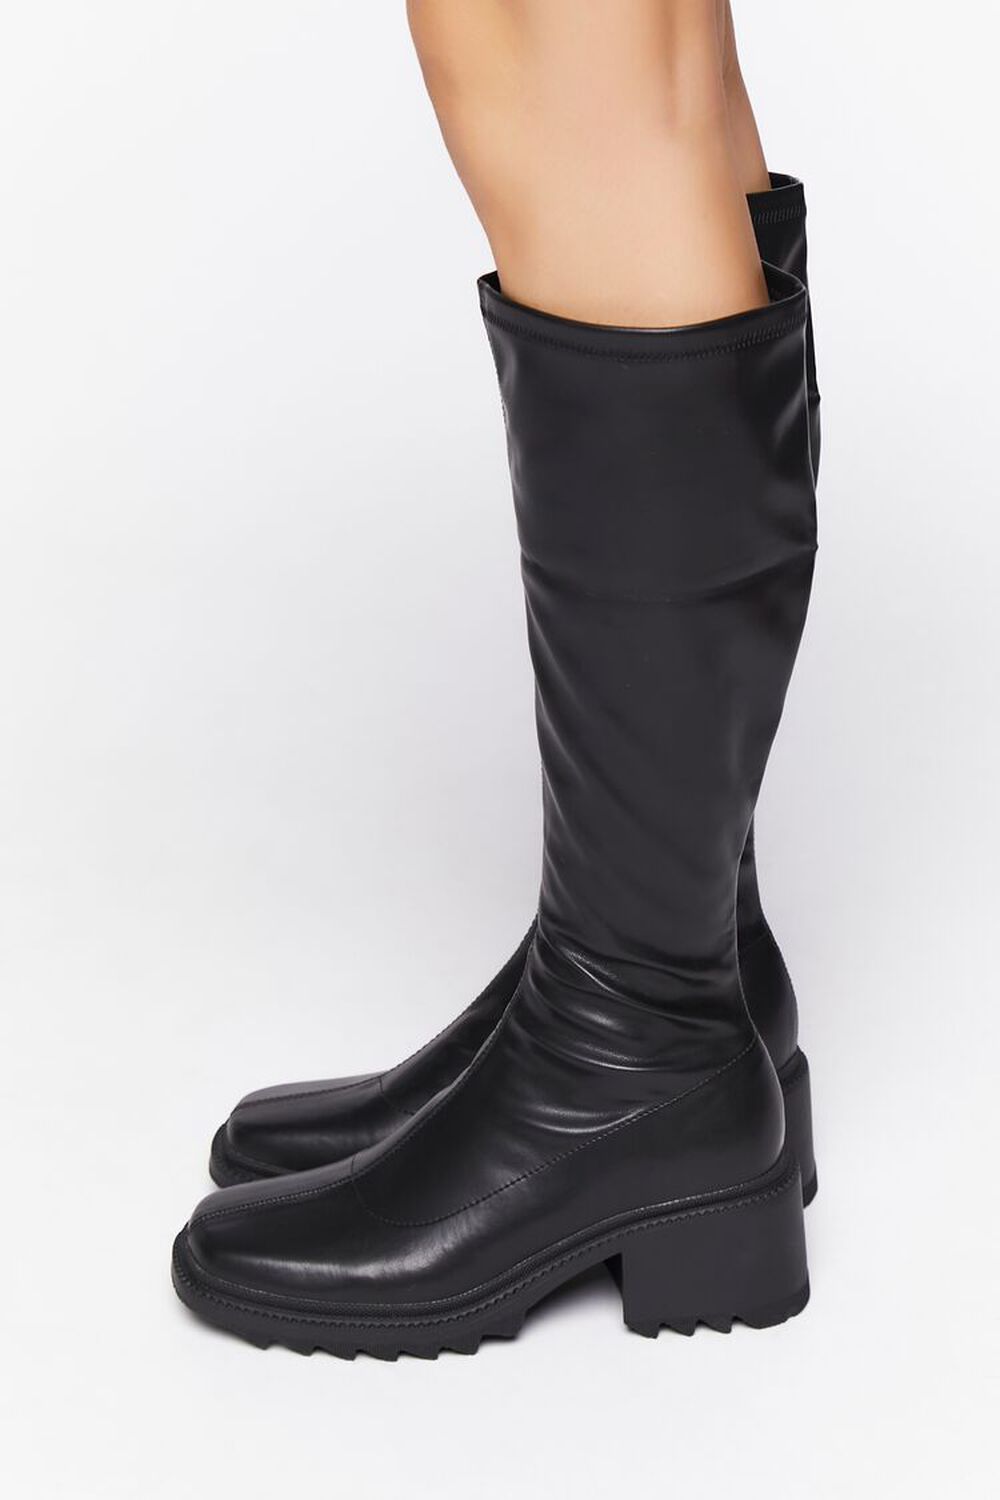 BLACK Faux Leather Knee-High Lug Boots, image 2